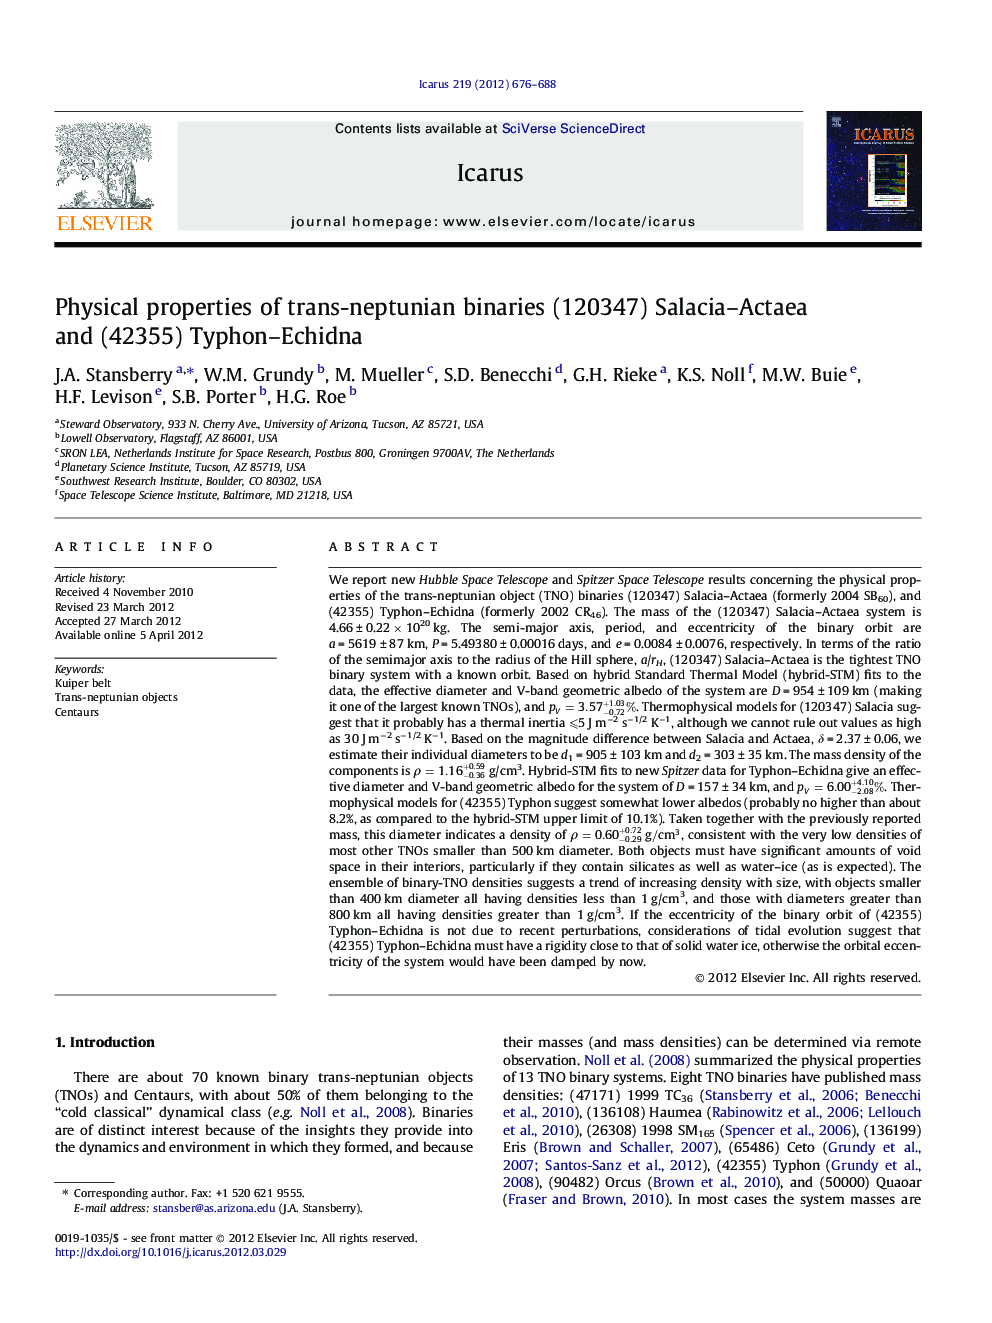 Physical properties of trans-neptunian binaries (120347) Salacia–Actaea and (42355) Typhon–Echidna